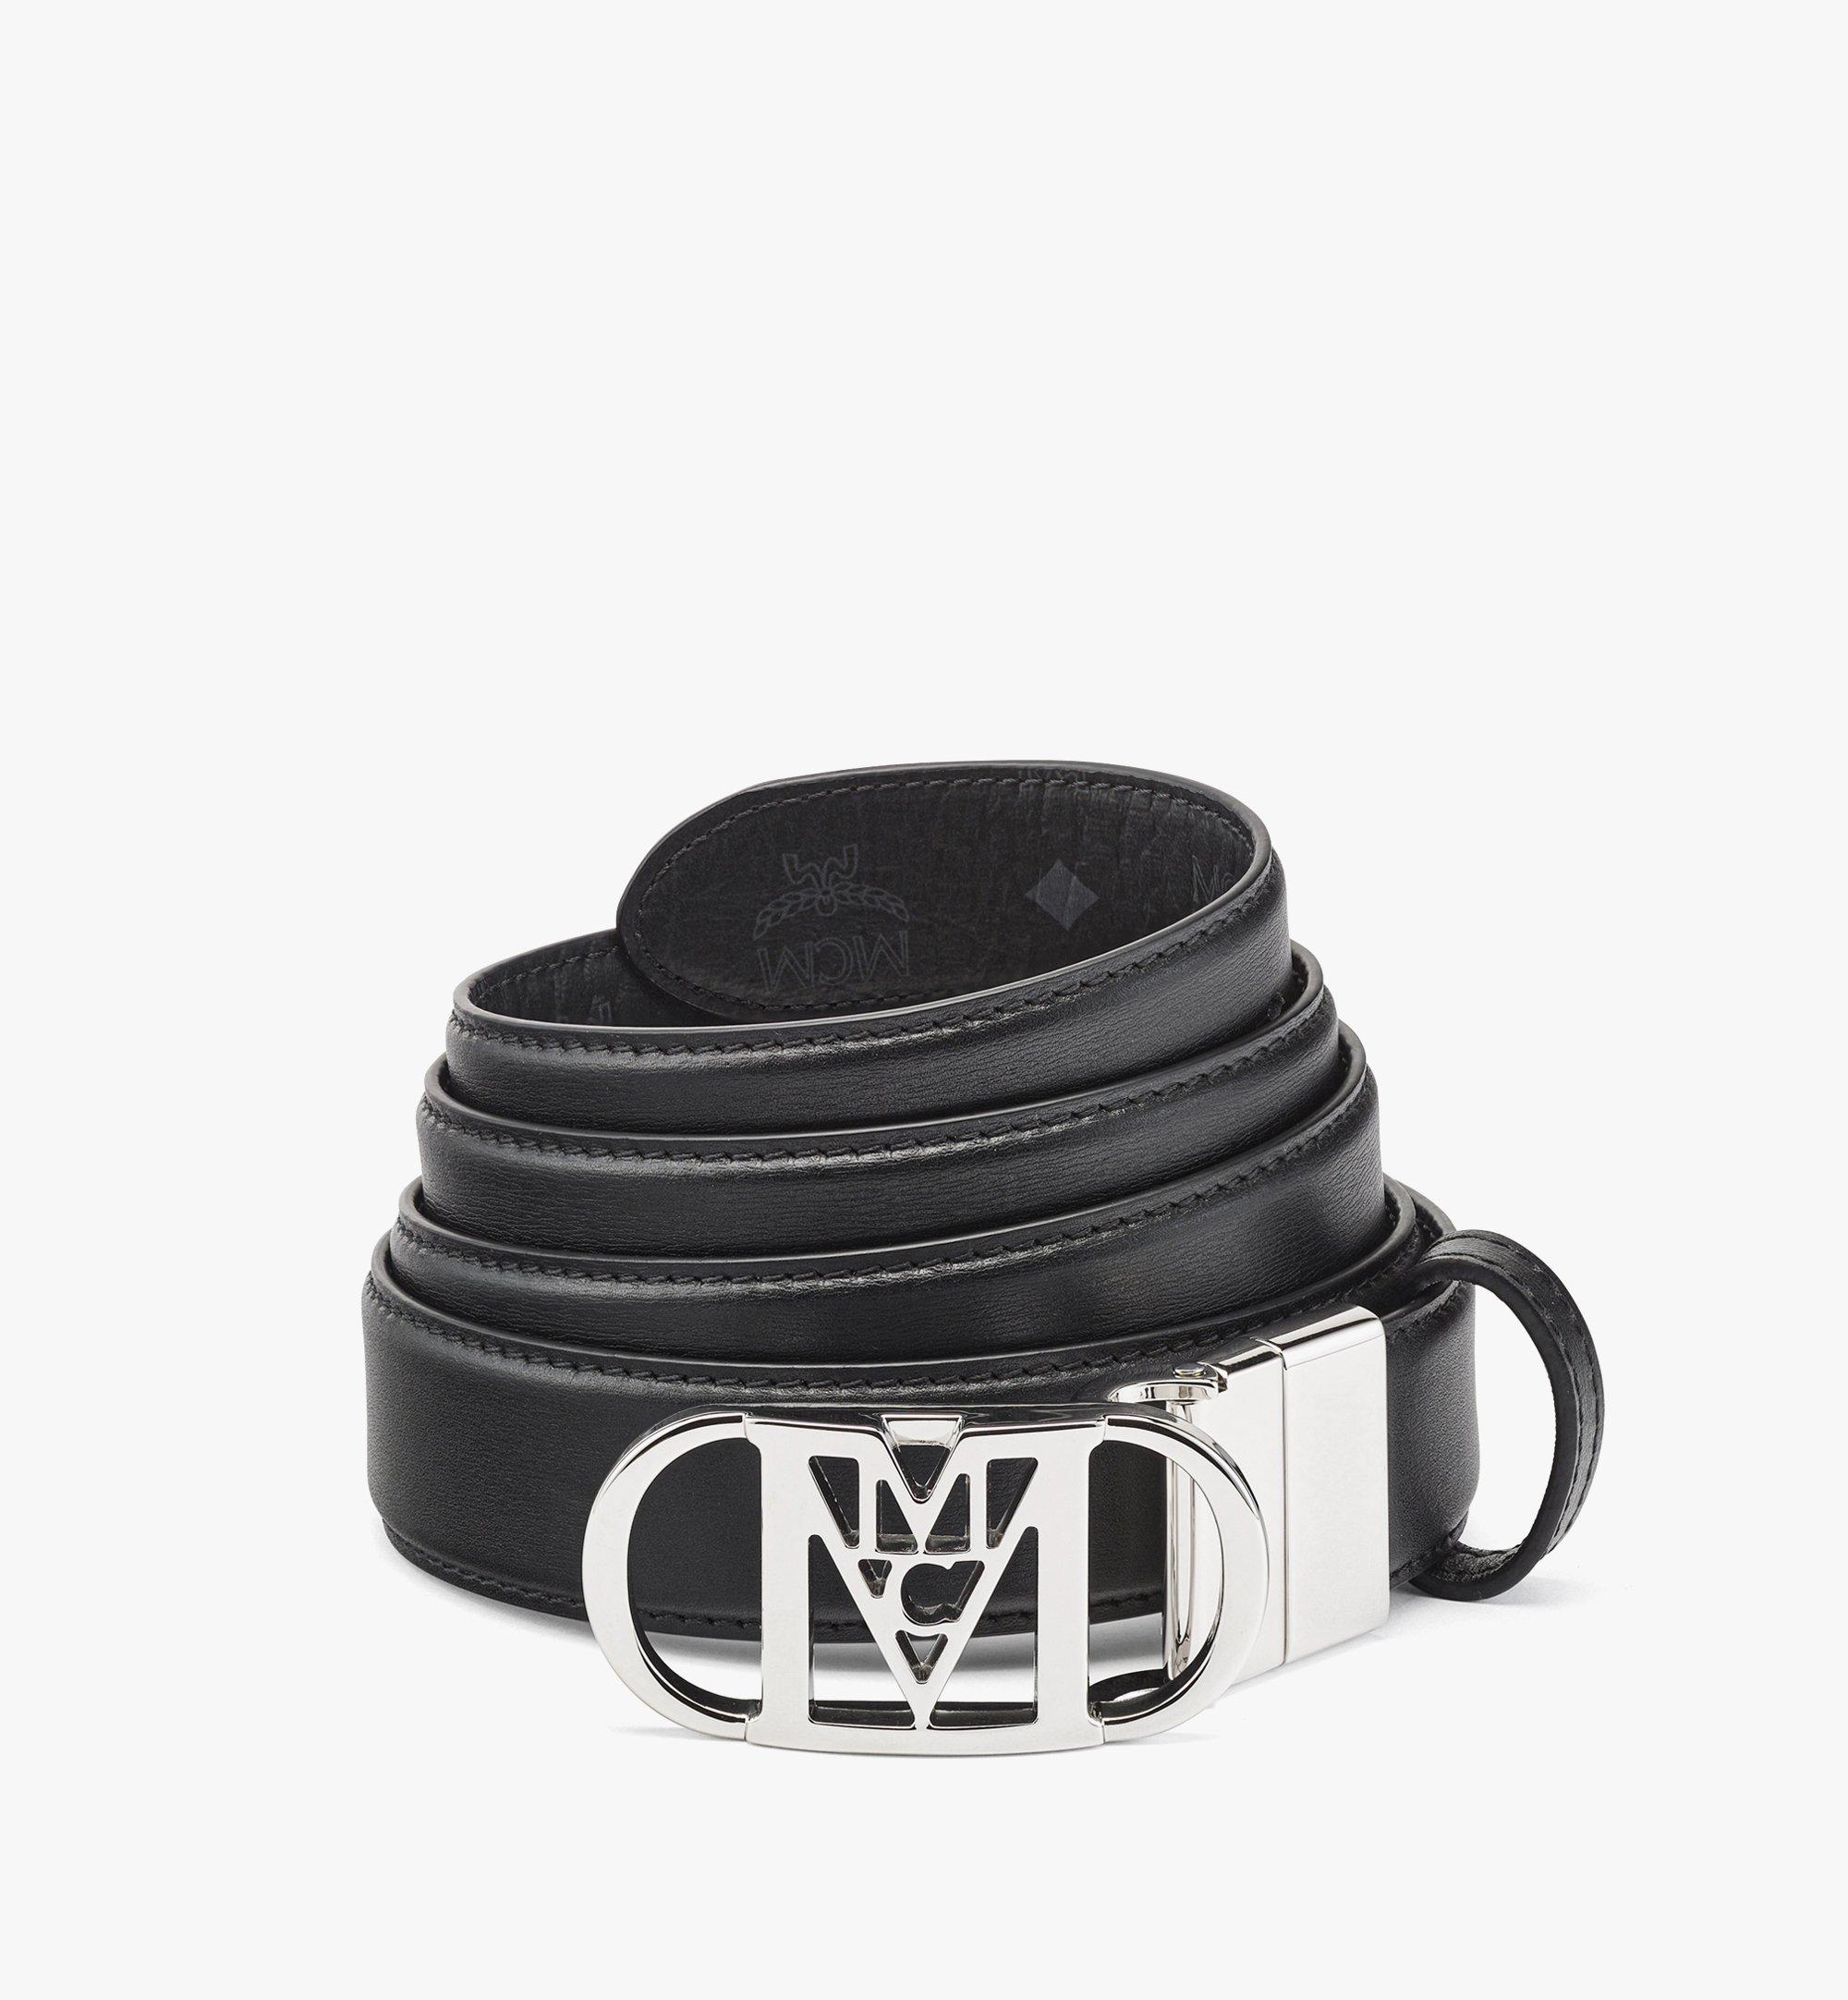 Leather belt MCM Beige size M International in Leather - 34915436